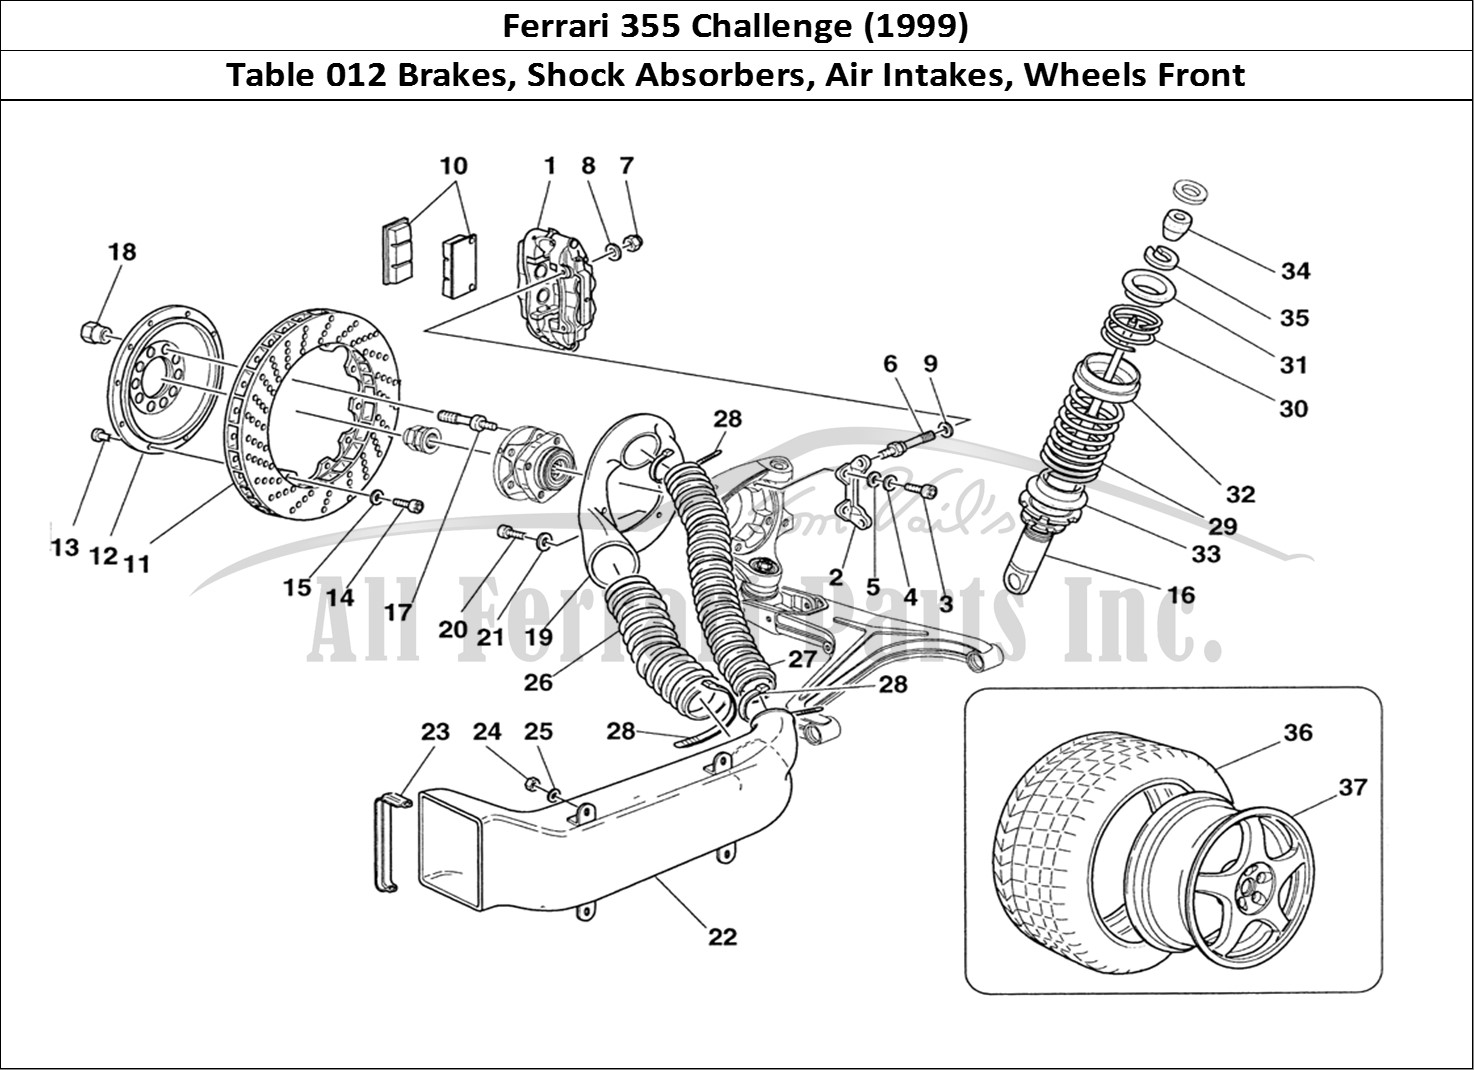 Ferrari Parts Ferrari 355 Challenge (1999) Page 012 Brakes - Shock-Absorbers